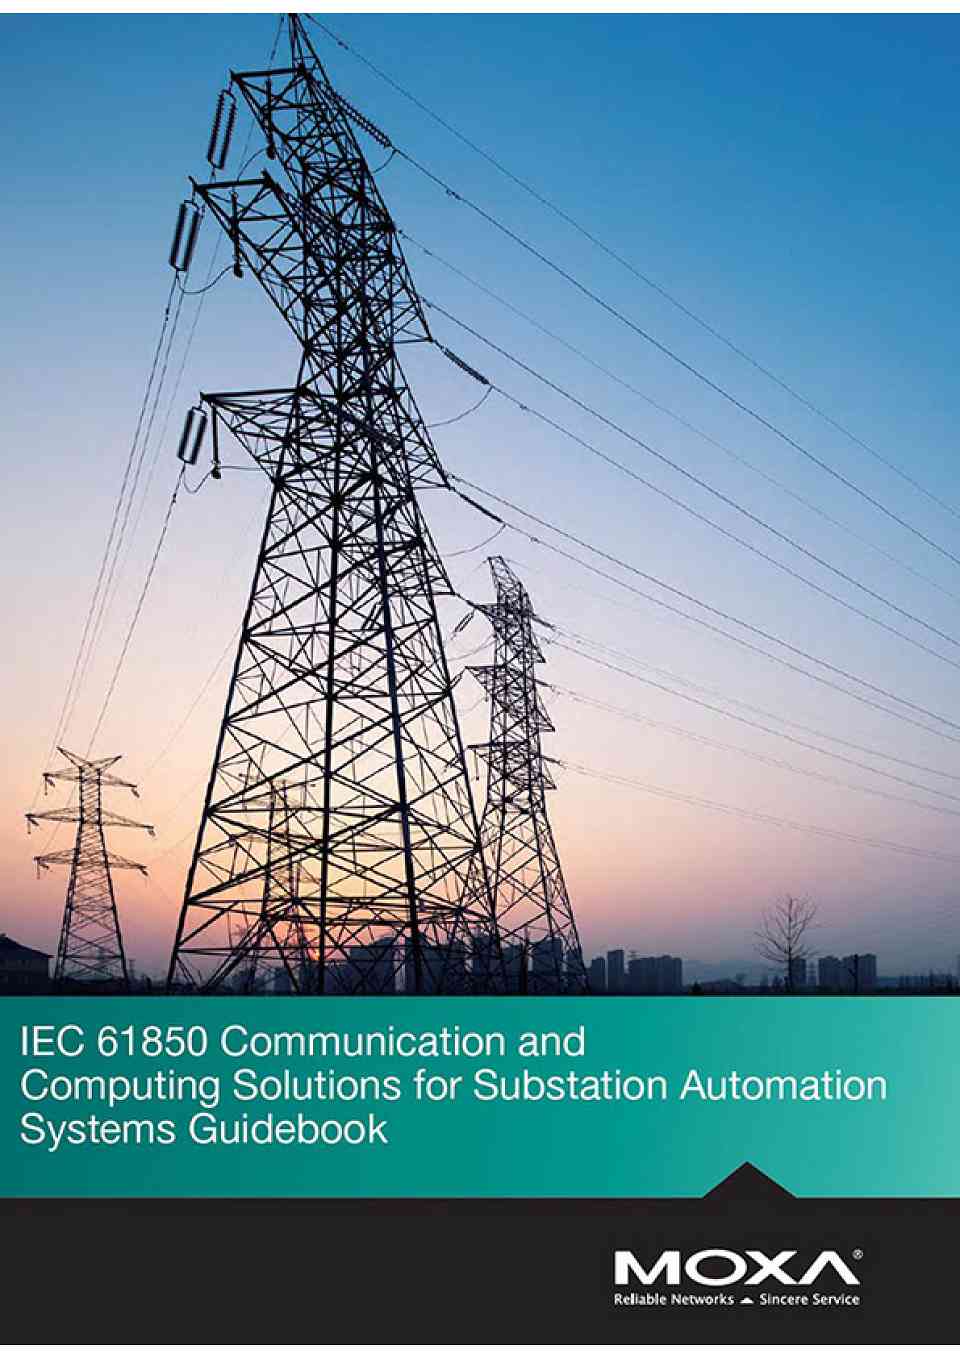 IEC 61850 Communication & Computing Solutions Catalogue Cover